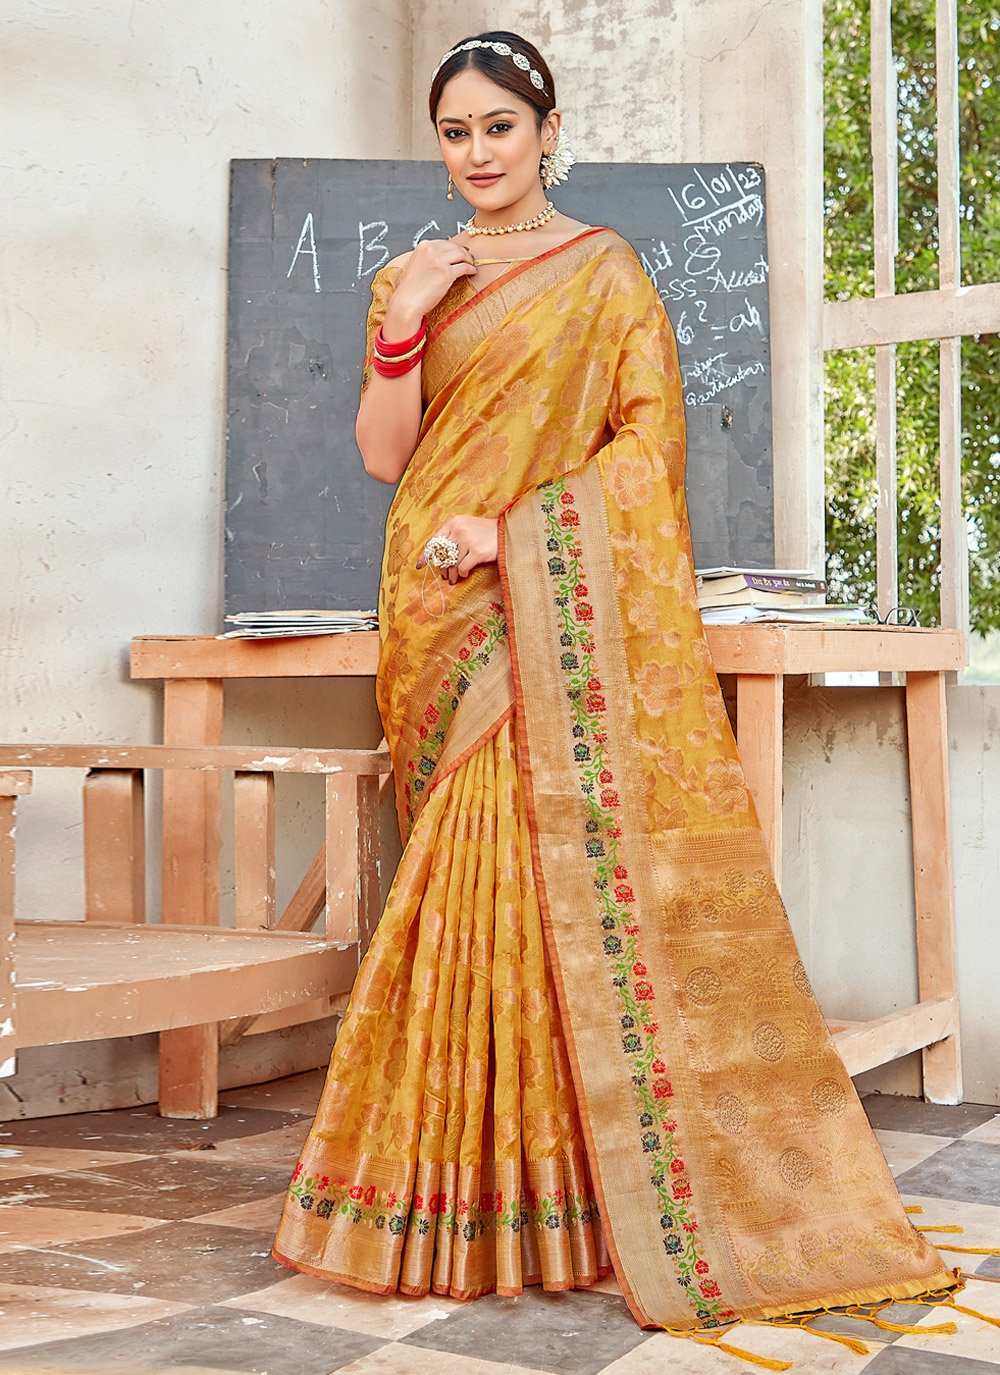 Embellished Saree with royal vintage feel. – Abhishek Sharma